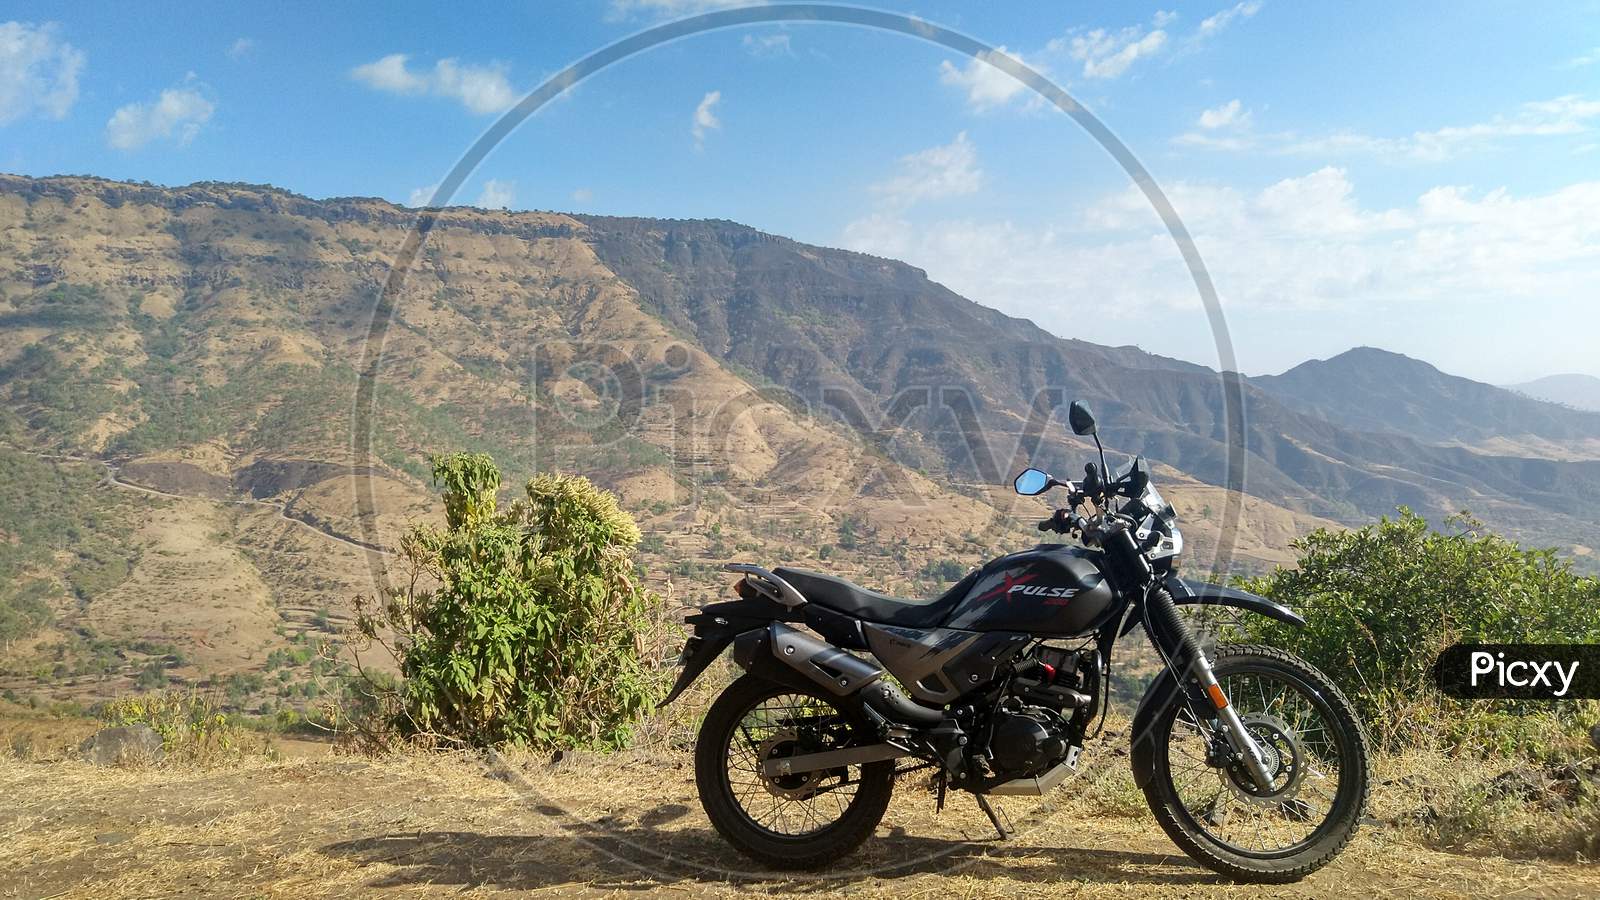 Traveling sahyadri mountains Range on Motorcycle